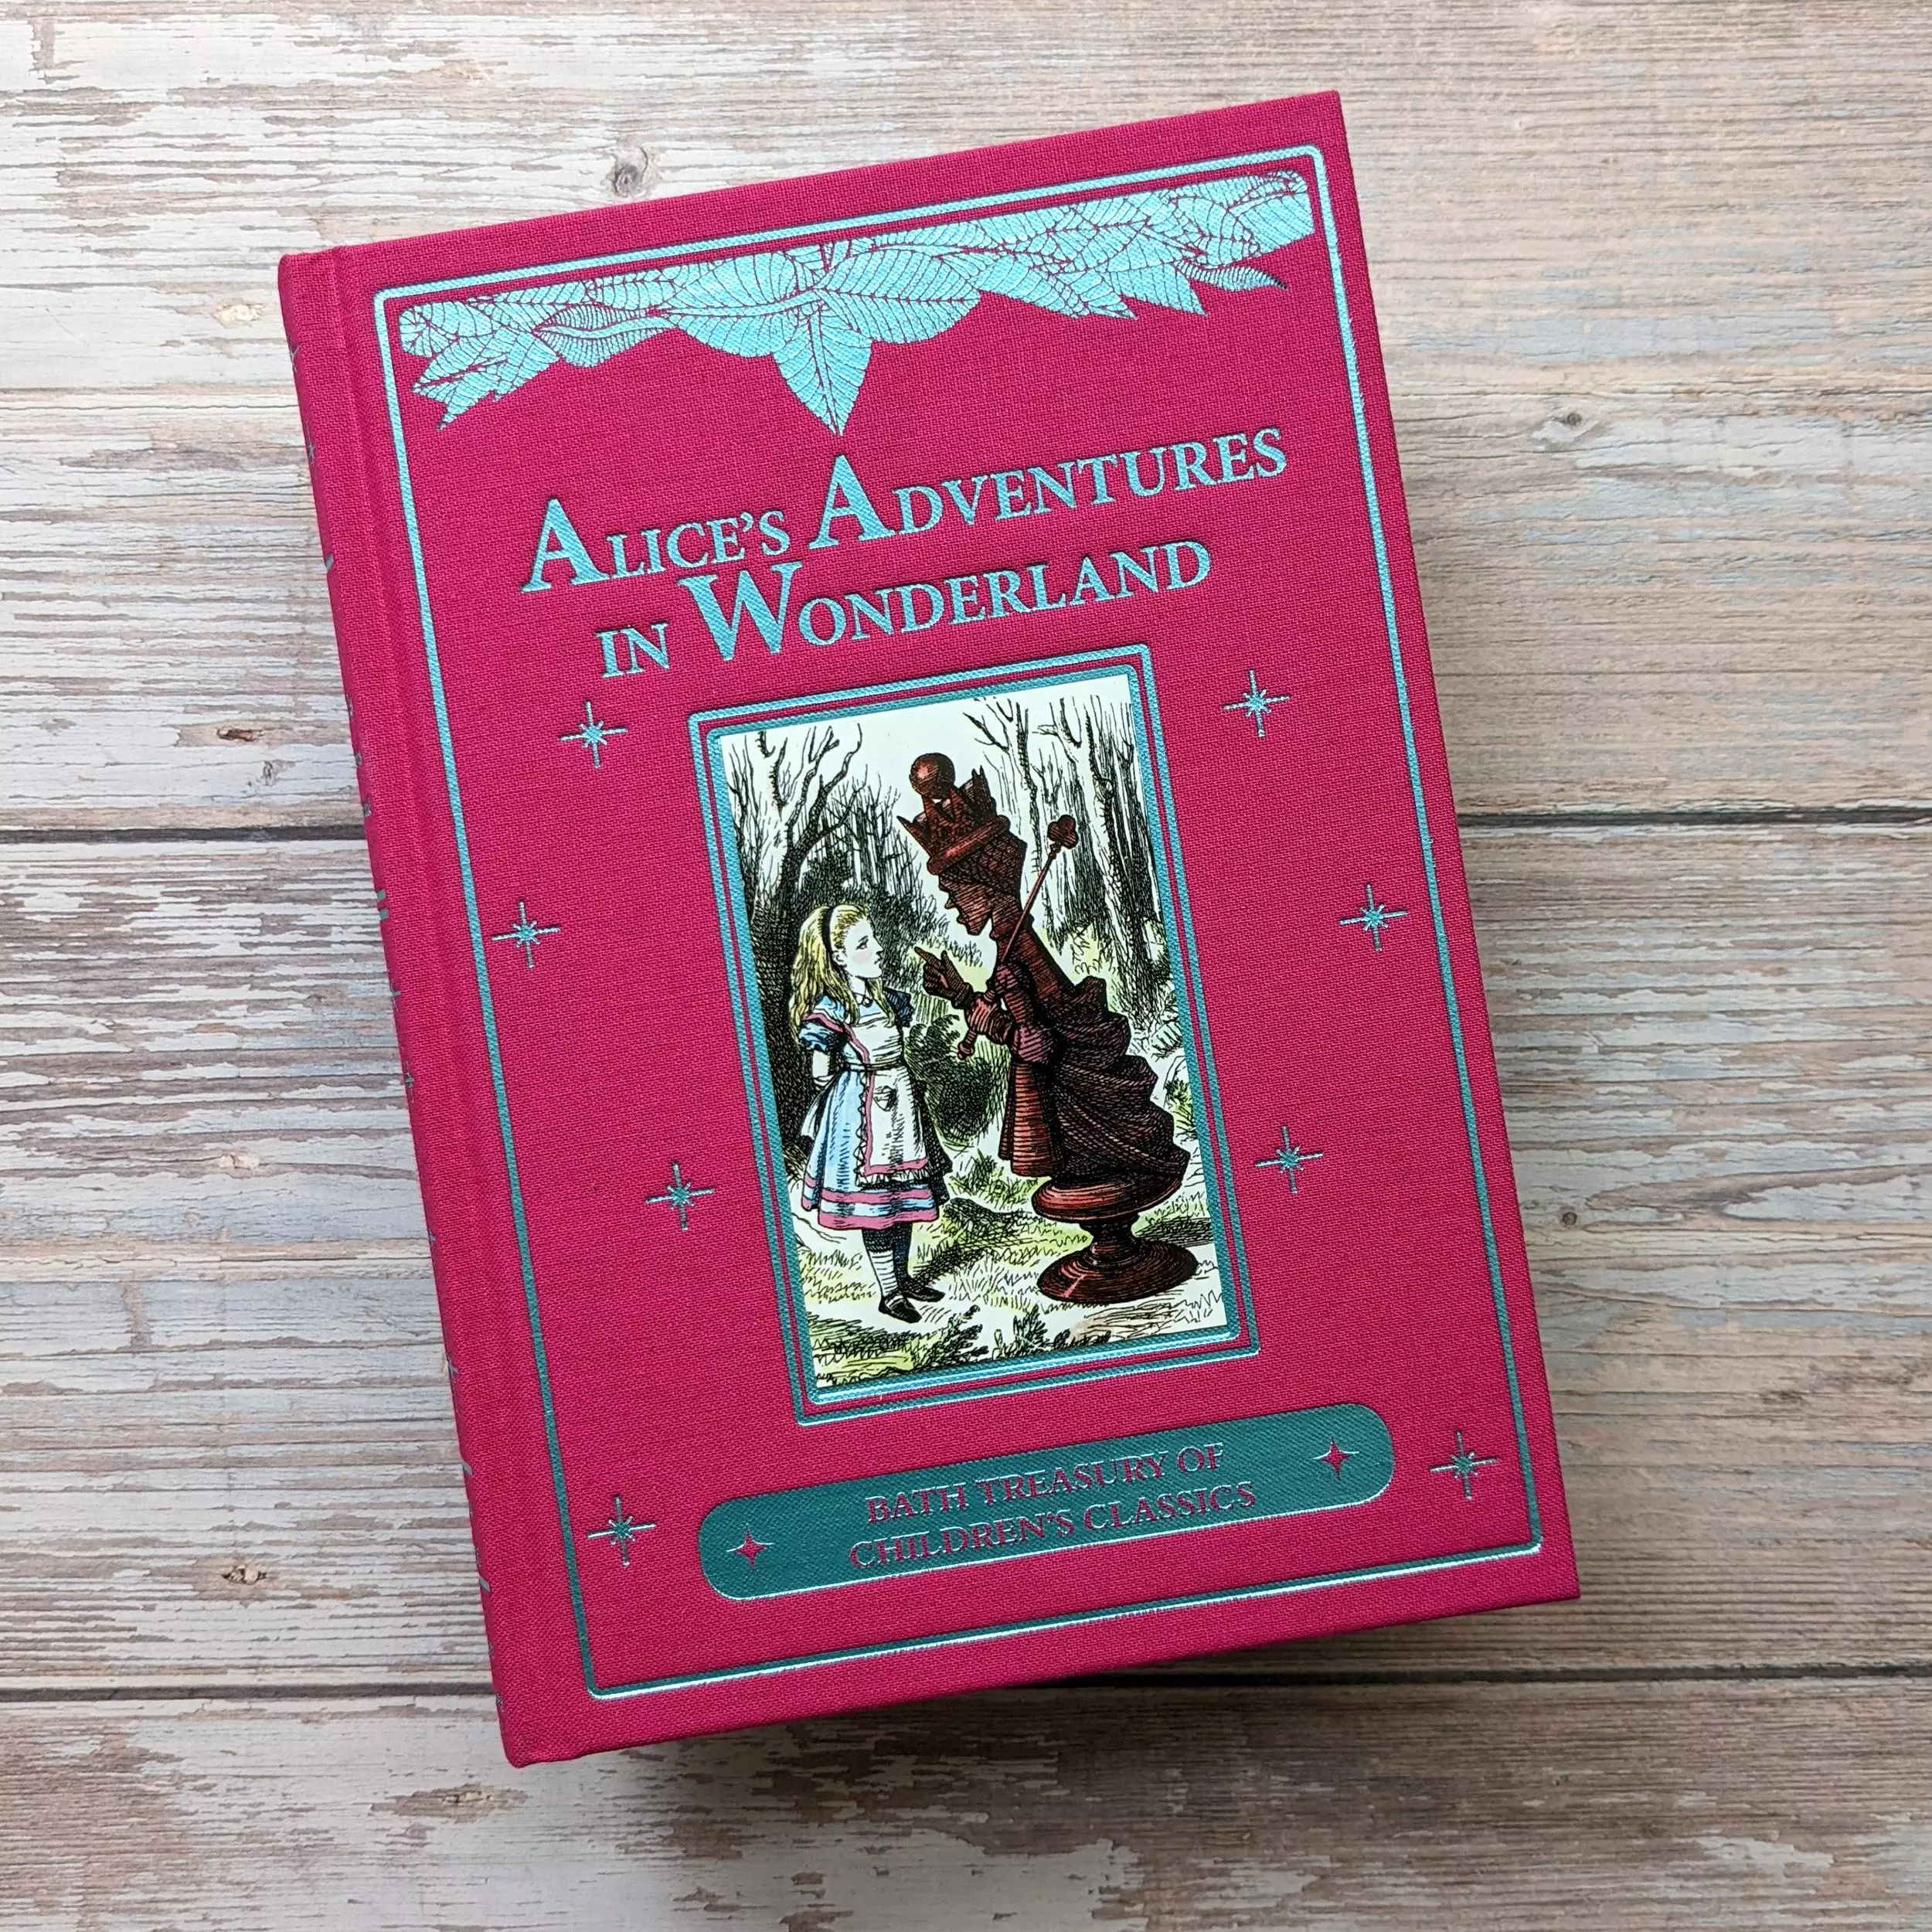 Bath Classics - Alice's Adventures in Wonderland & Through the Looking Glass (Illustrated Children's Classics)